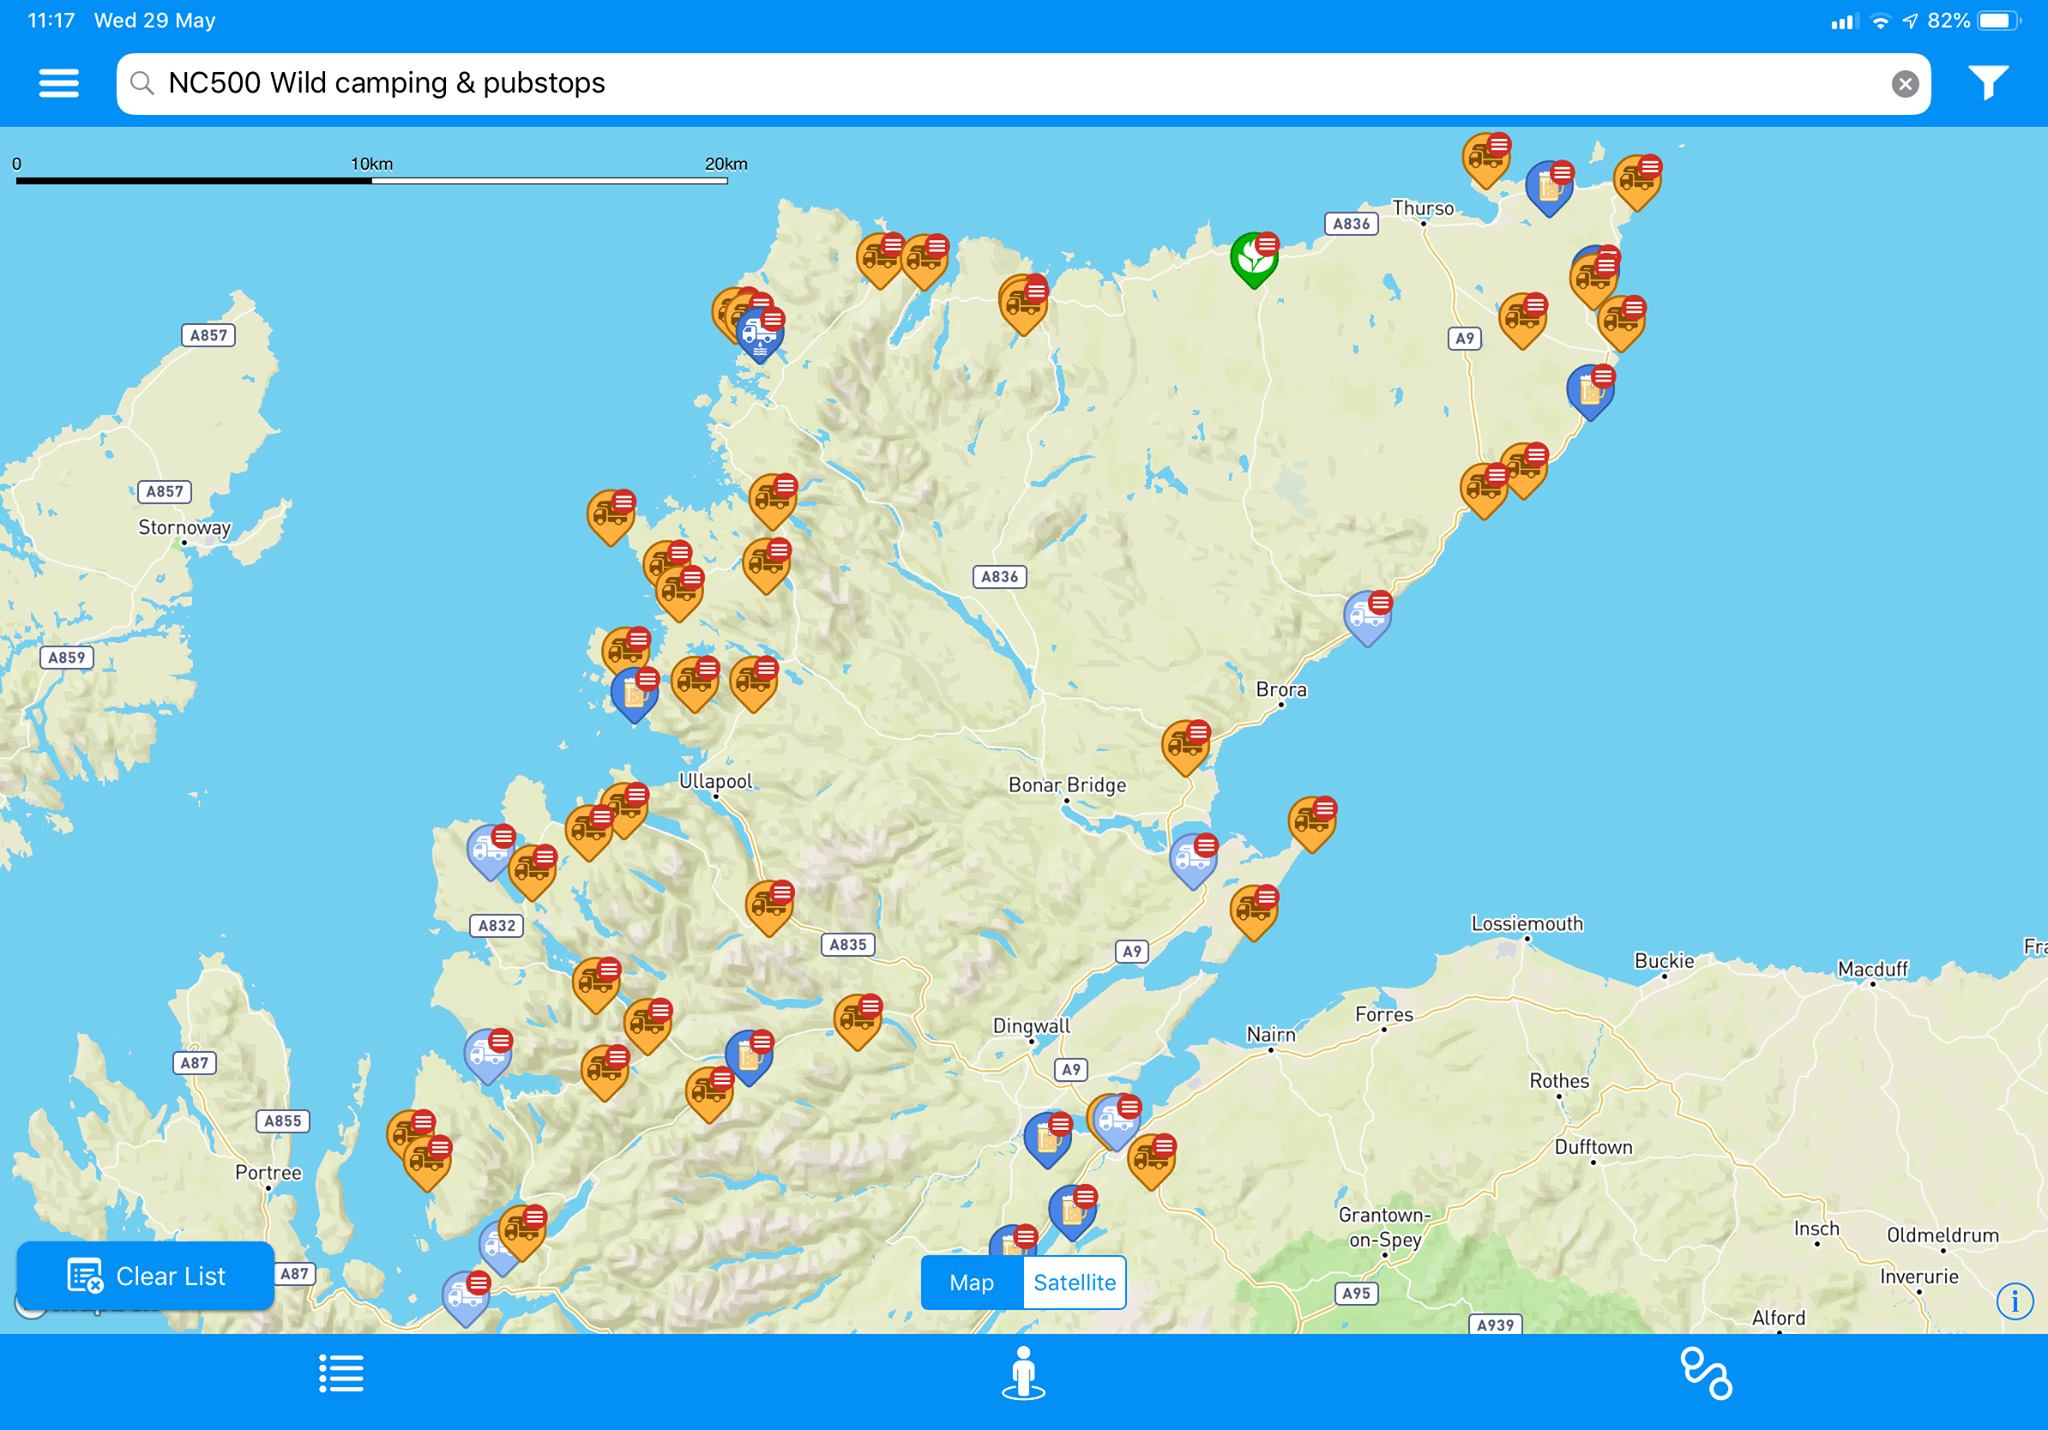 scotland north coast 500 wild camping map